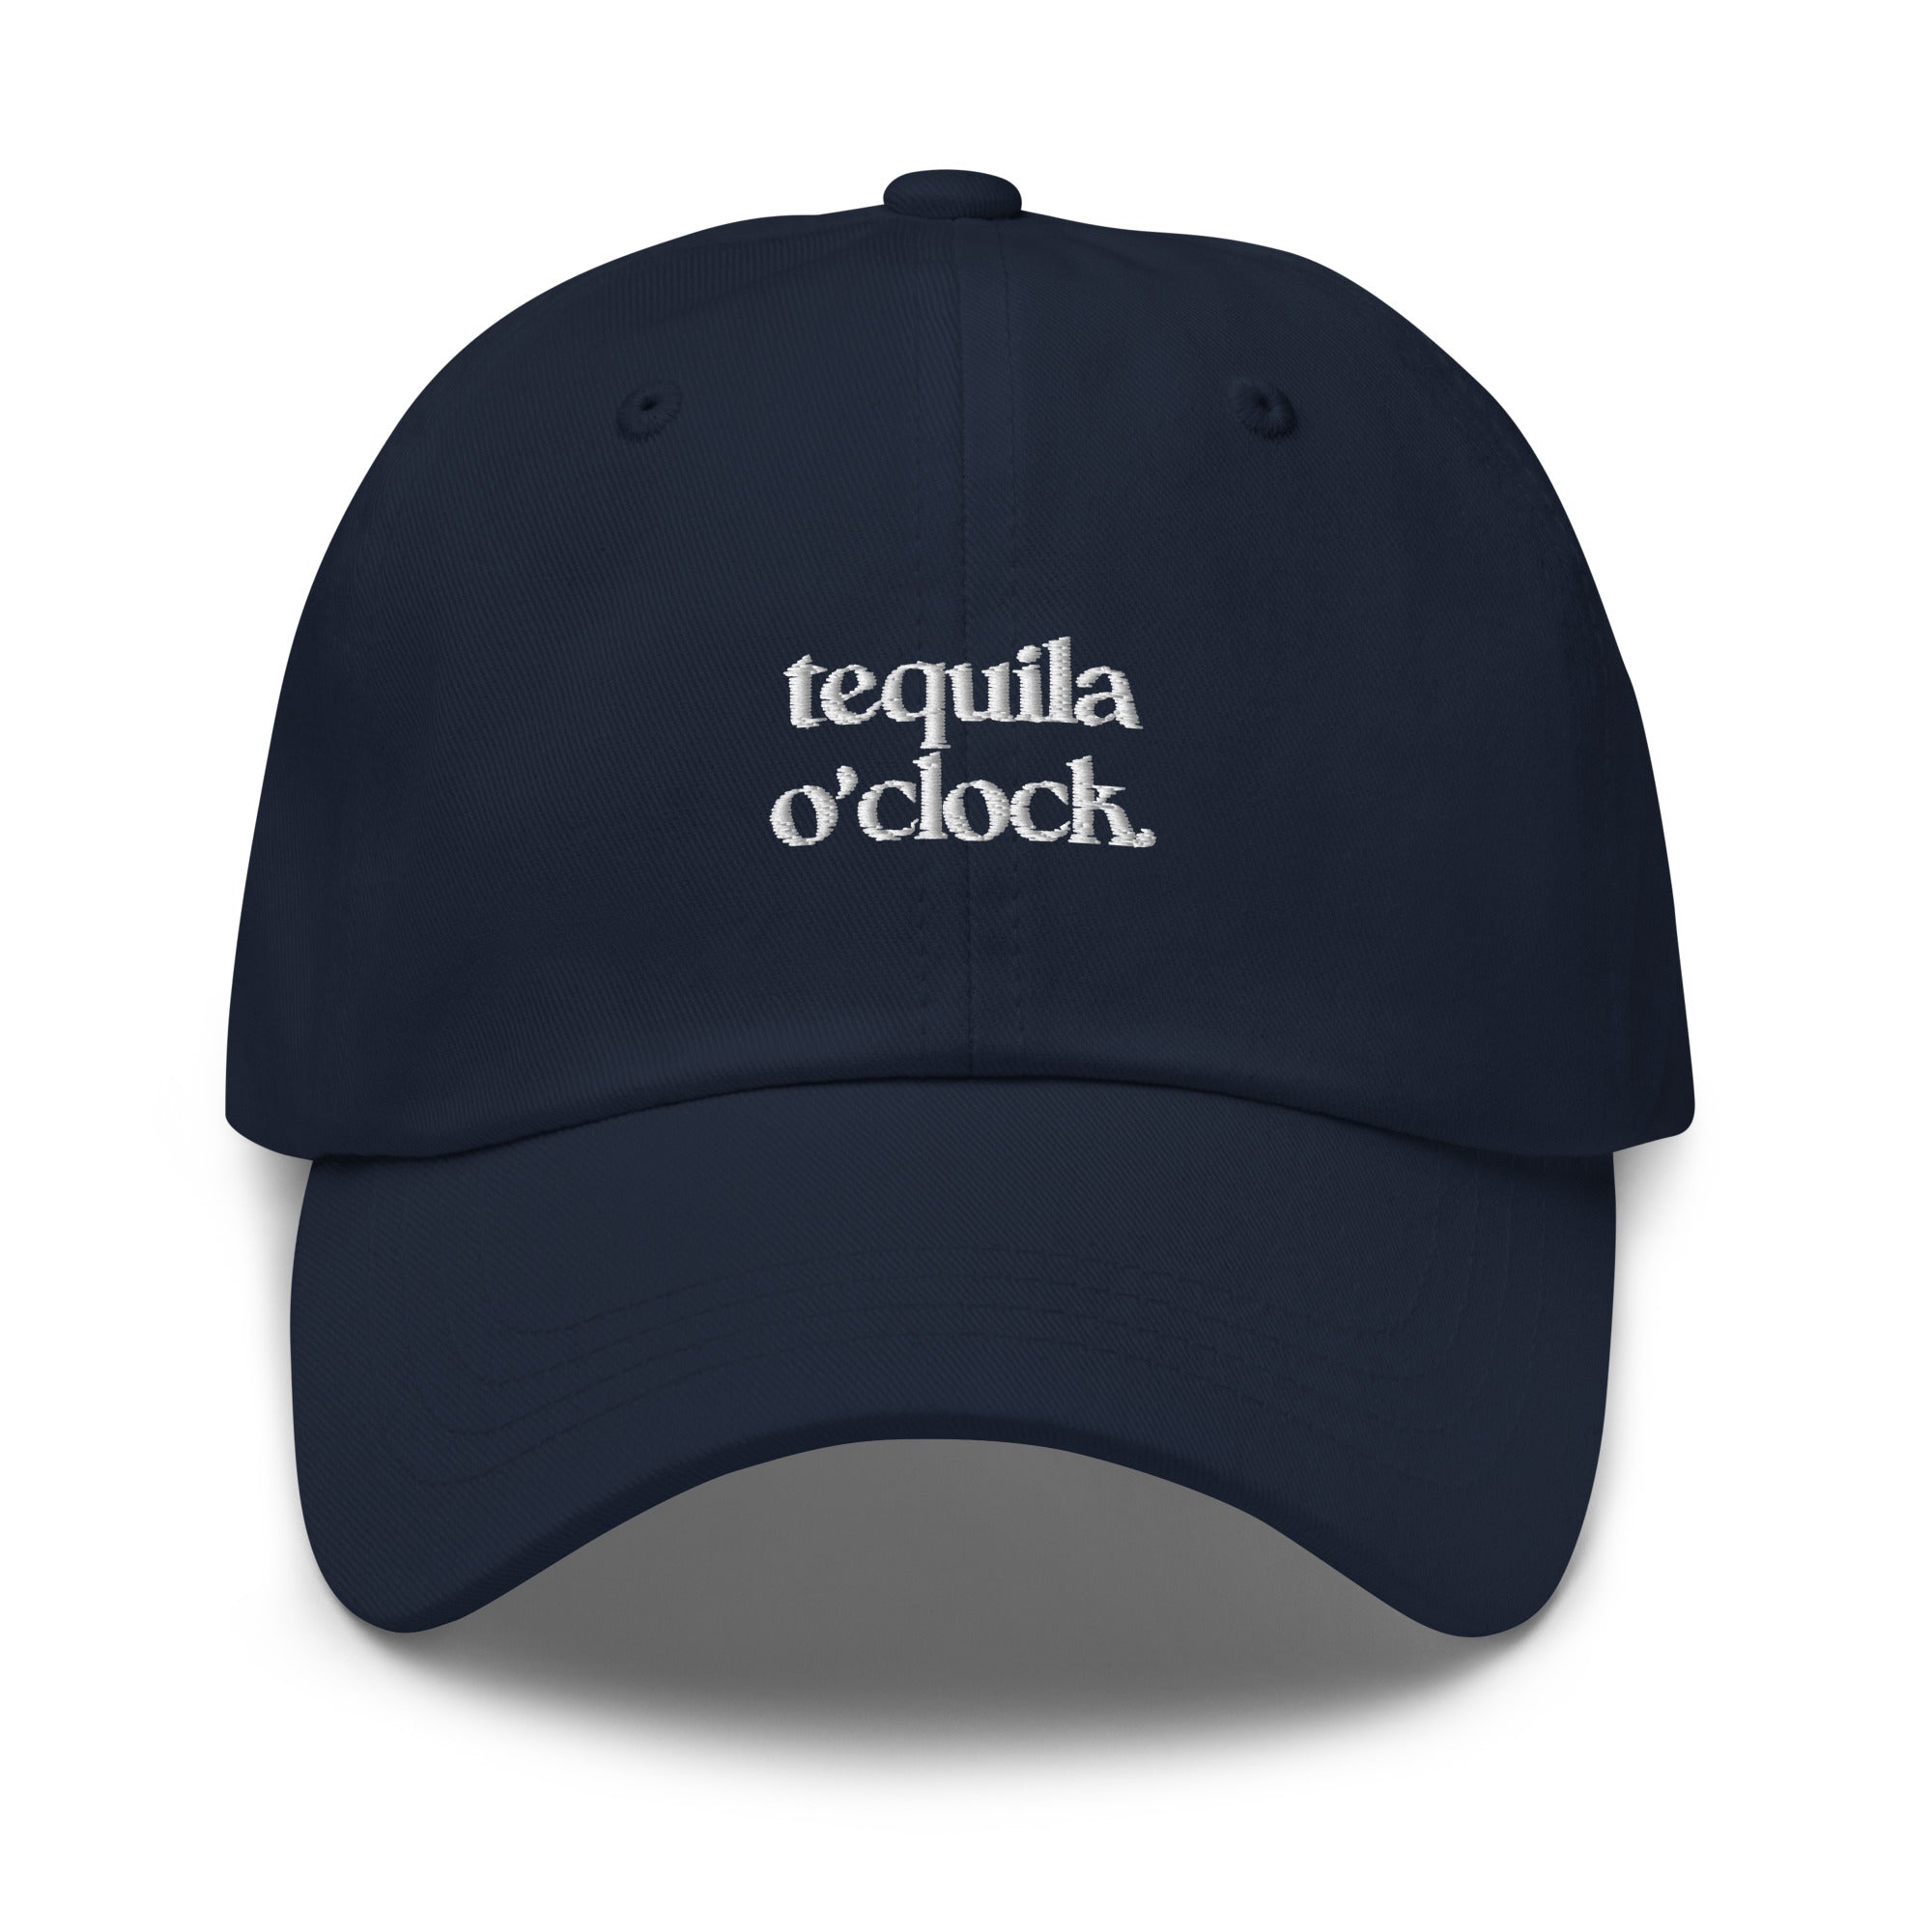 Tequila O'clock - Dad hat